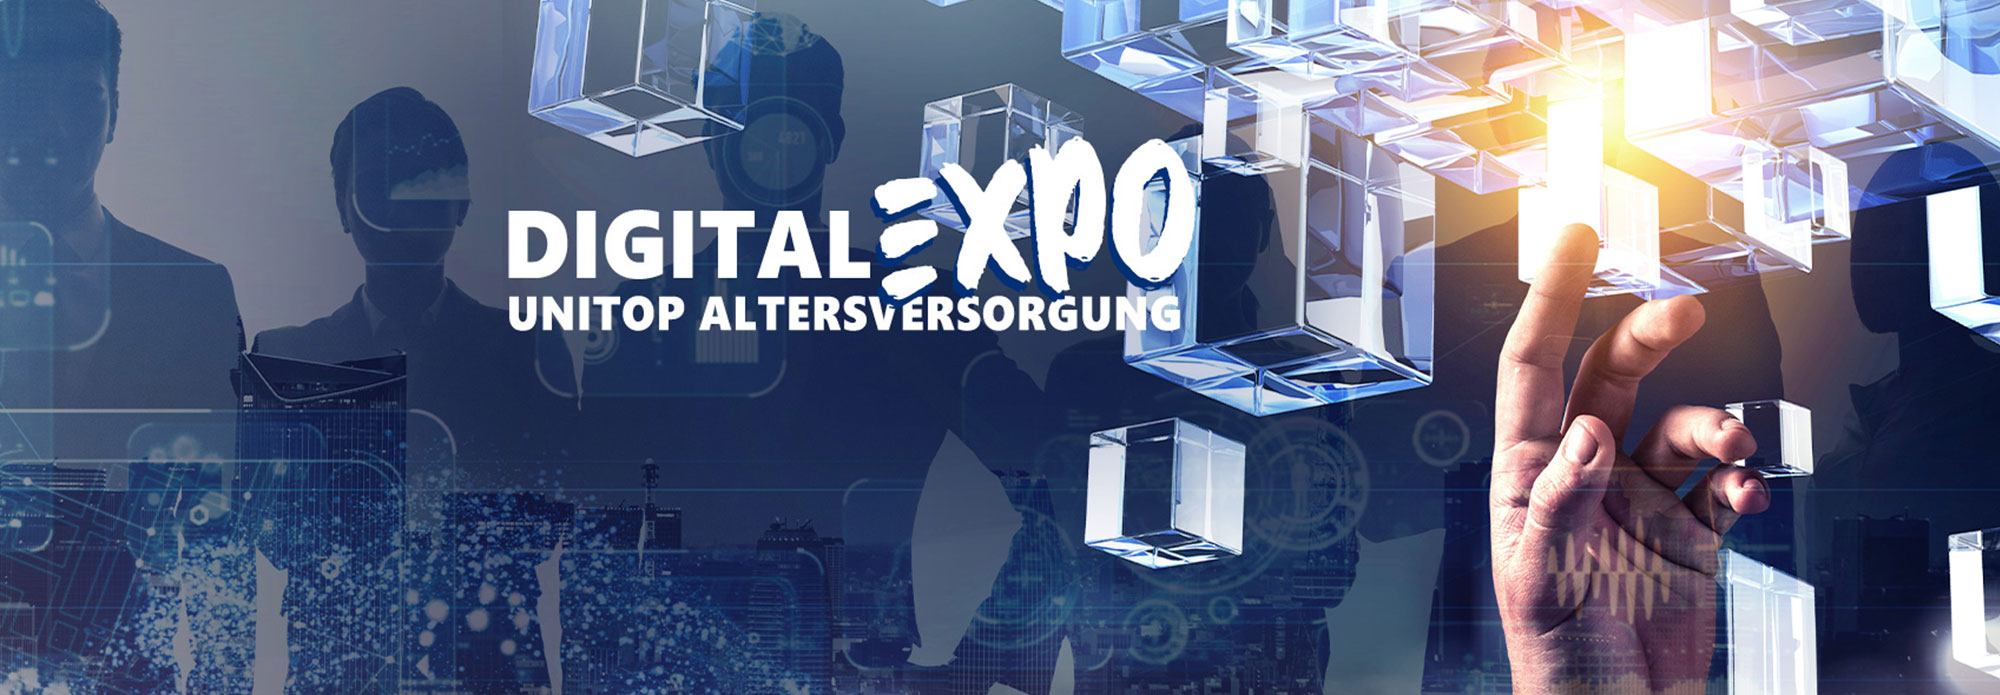 GOB Digital Expo unitop Altersversorgung